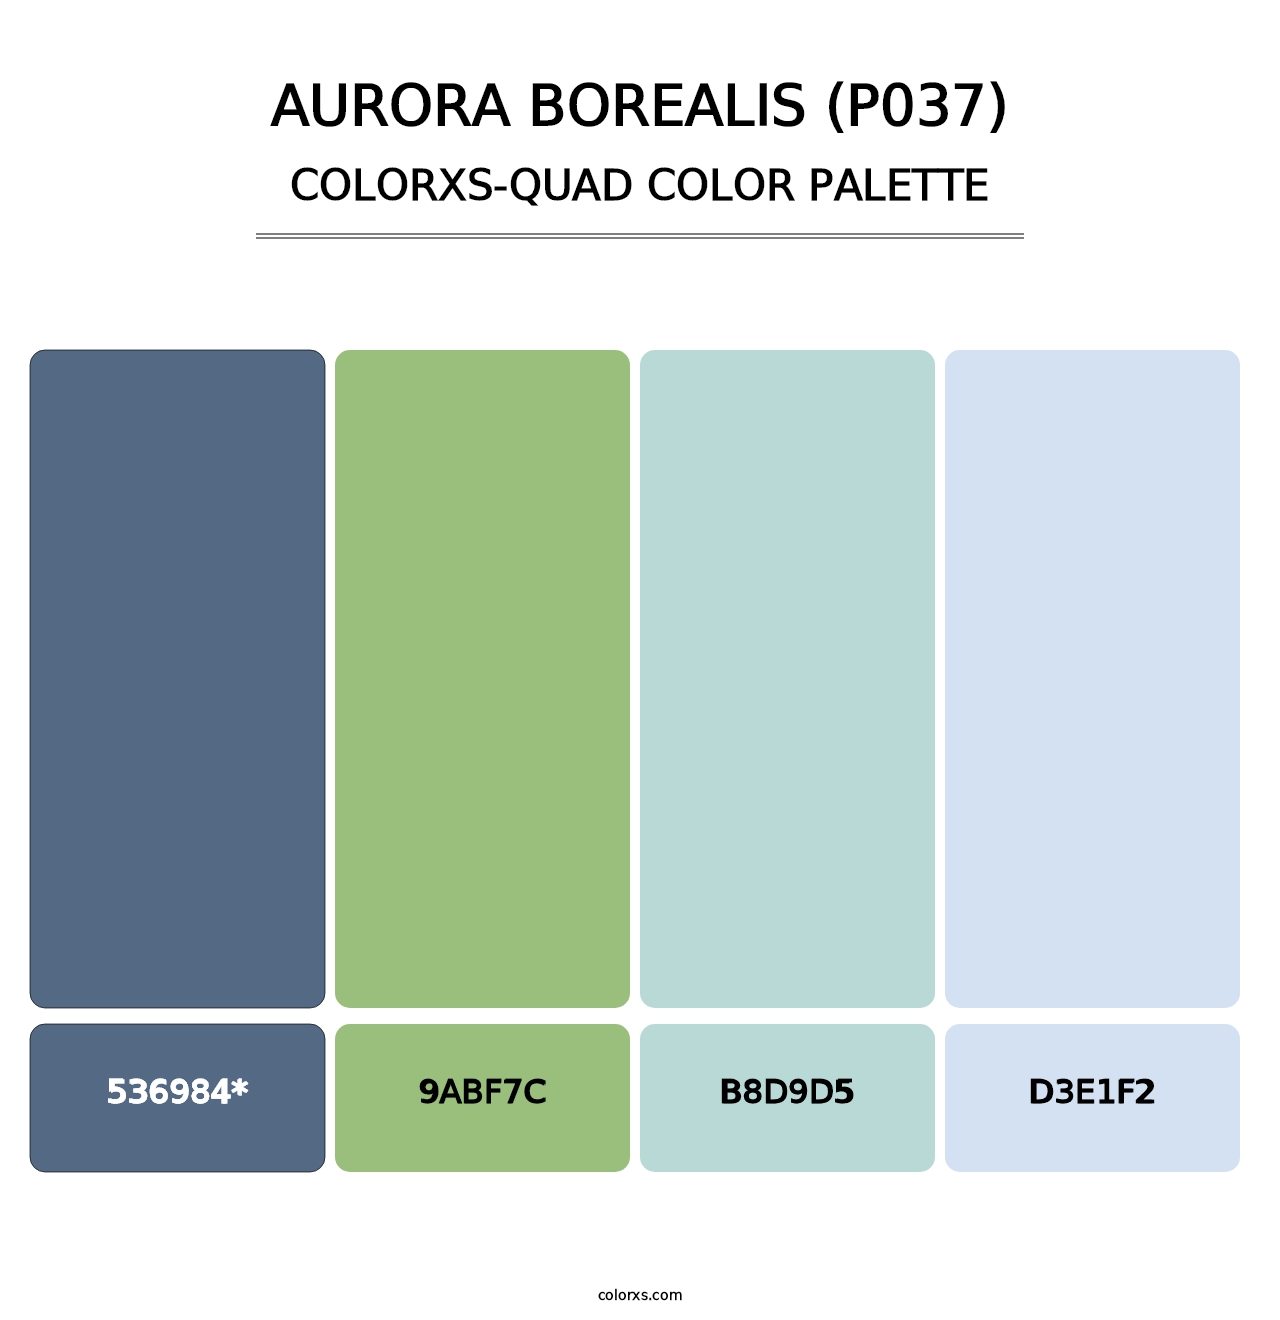 Aurora Borealis (P037) - Colorxs Quad Palette